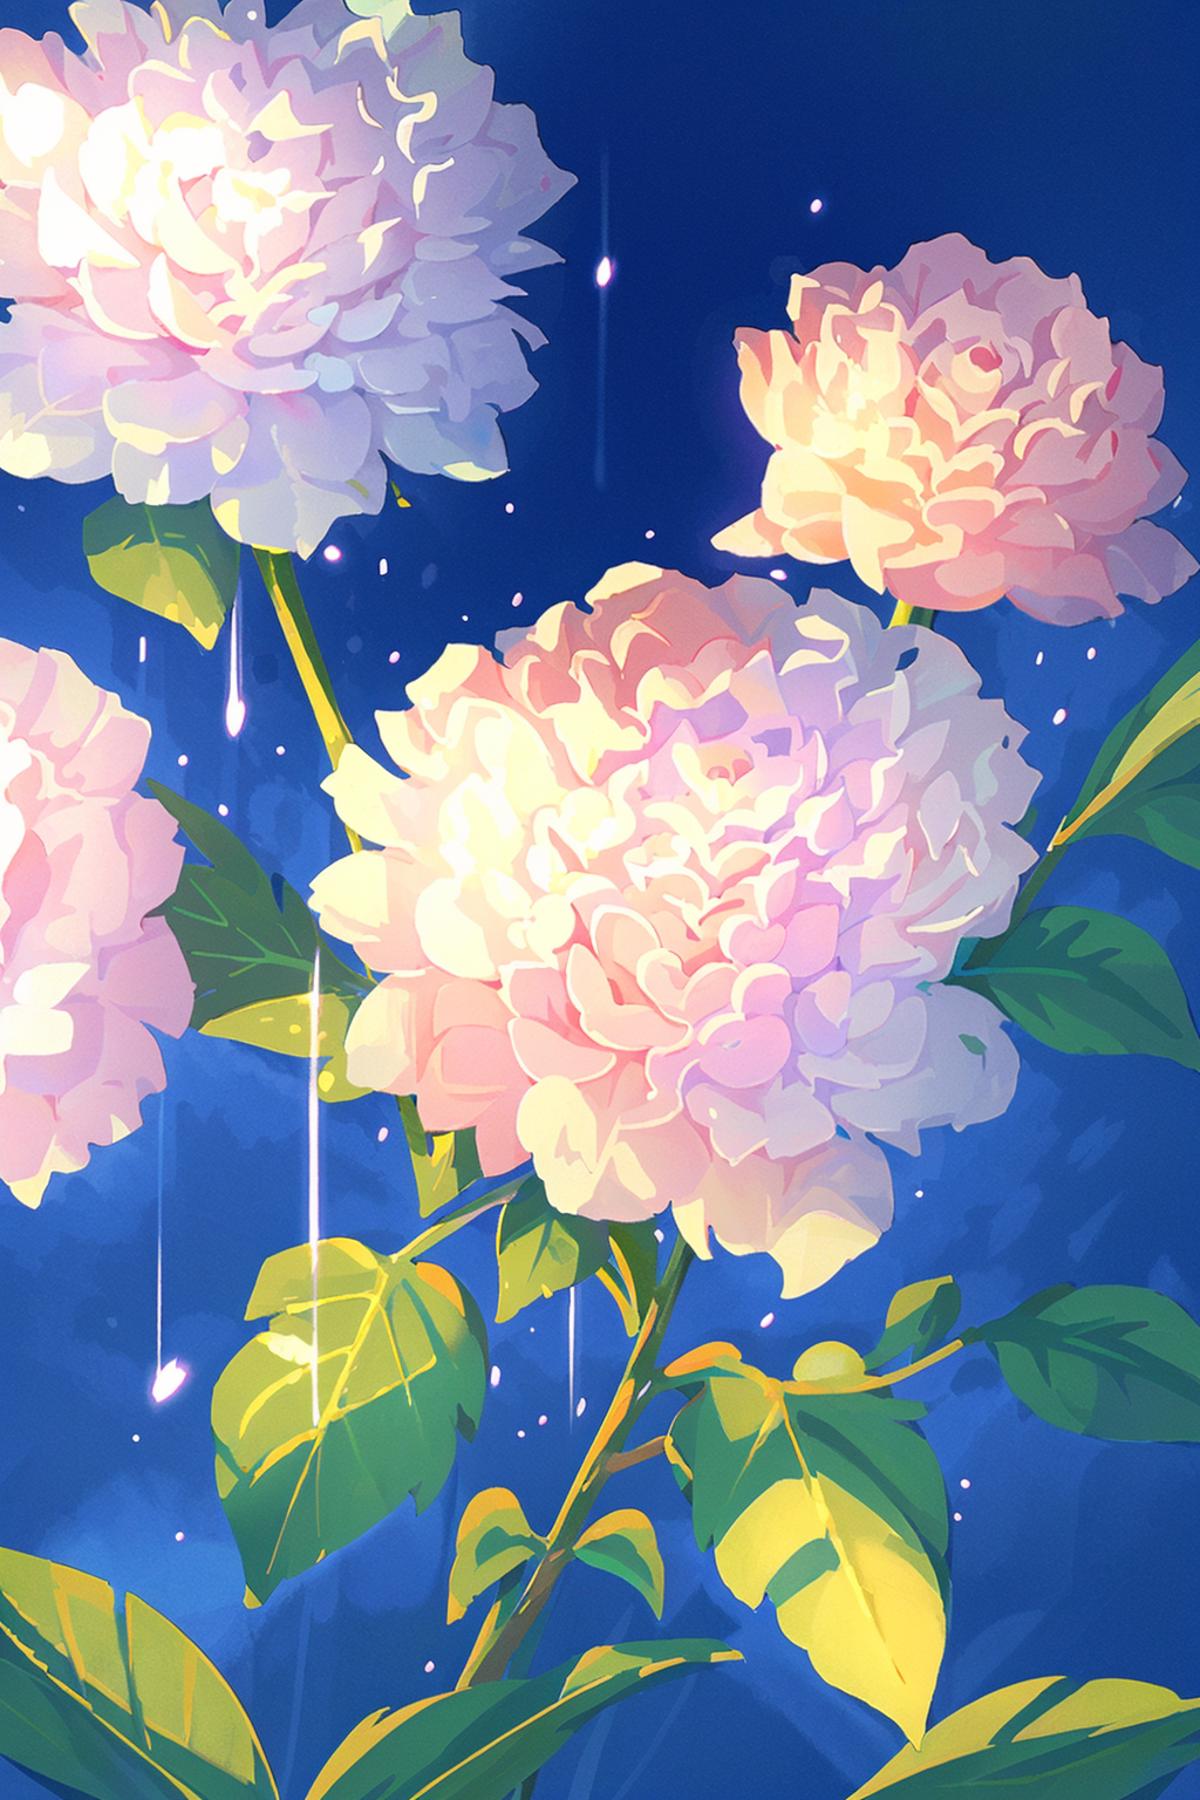 floweras image by nnna